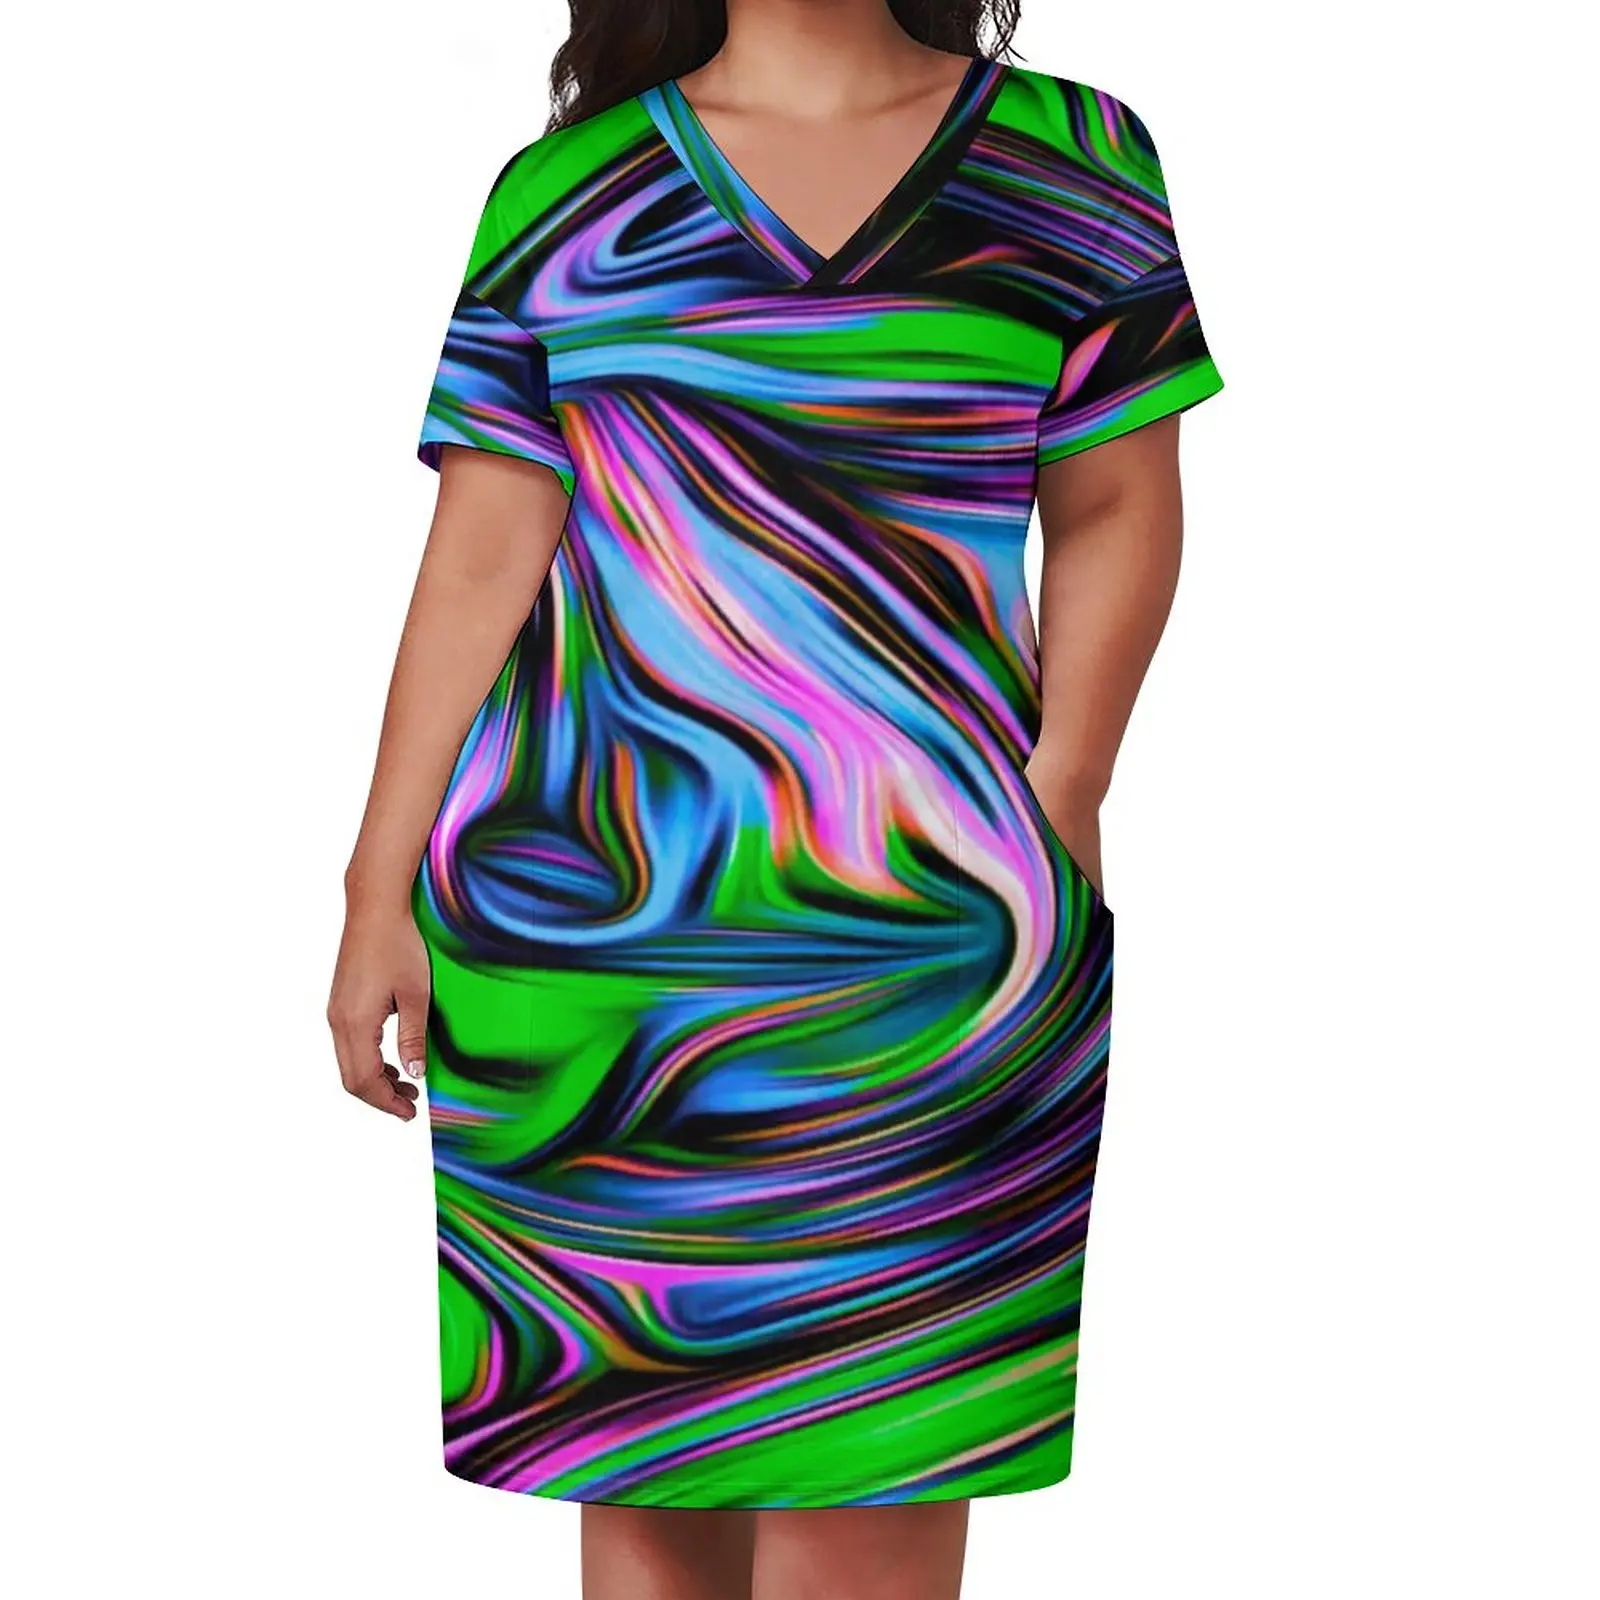 Neon Paint Swirl Dress V Neck Colorful Liquid Print Sexy Dresses Women Street Fashion Casual Dress With Pockets Plus Size 5XL